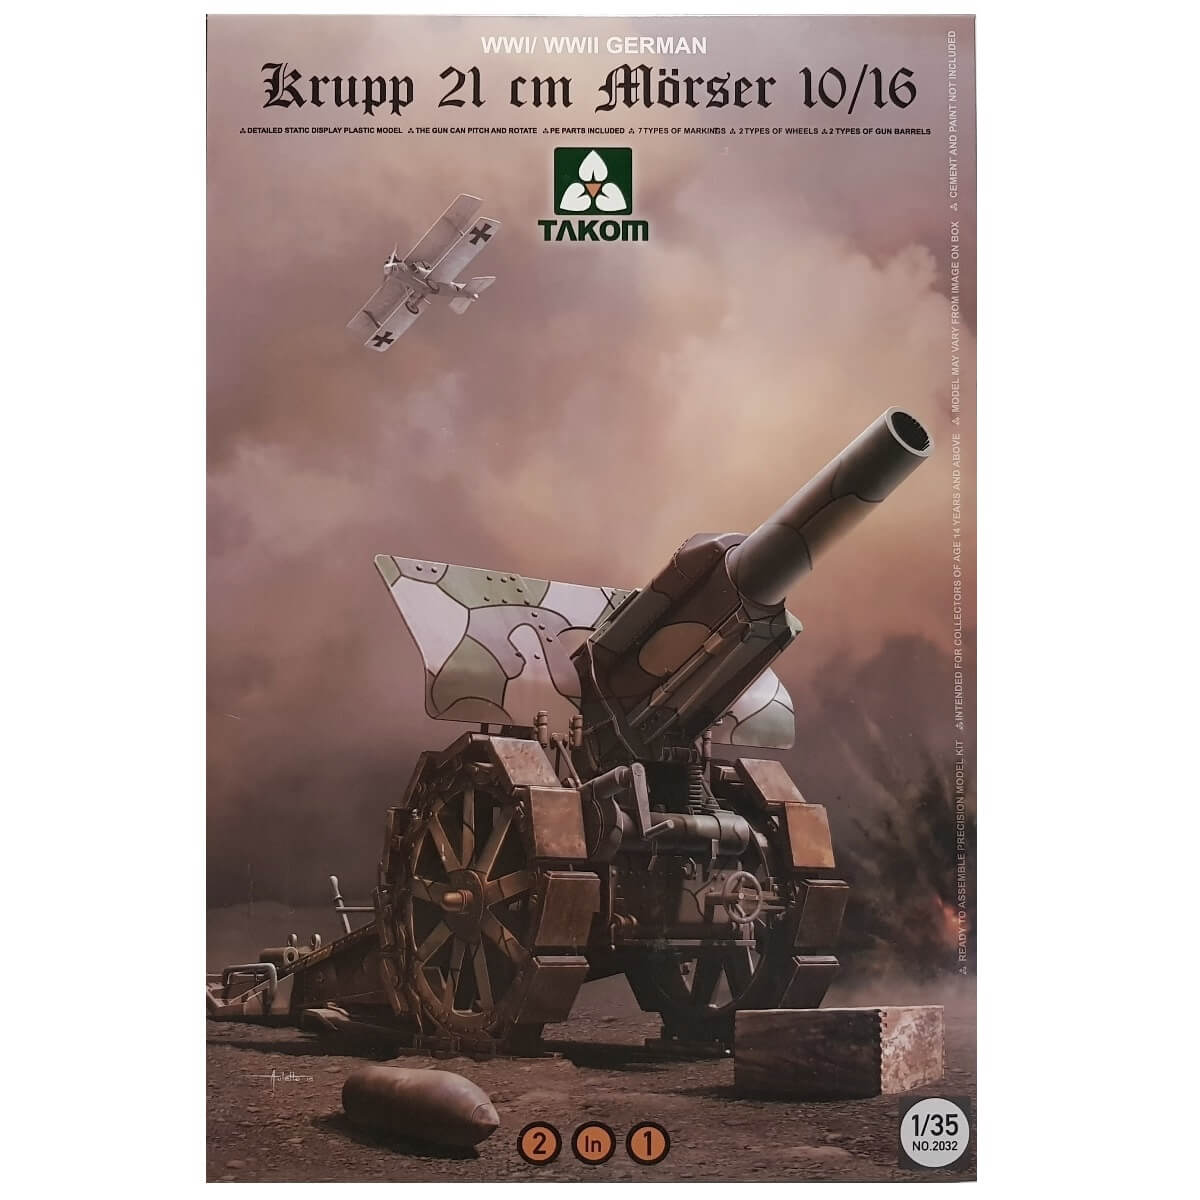 1:35 WWI / WWII GERMAN Krupp 21cm Morser 10/16 - TAKOM